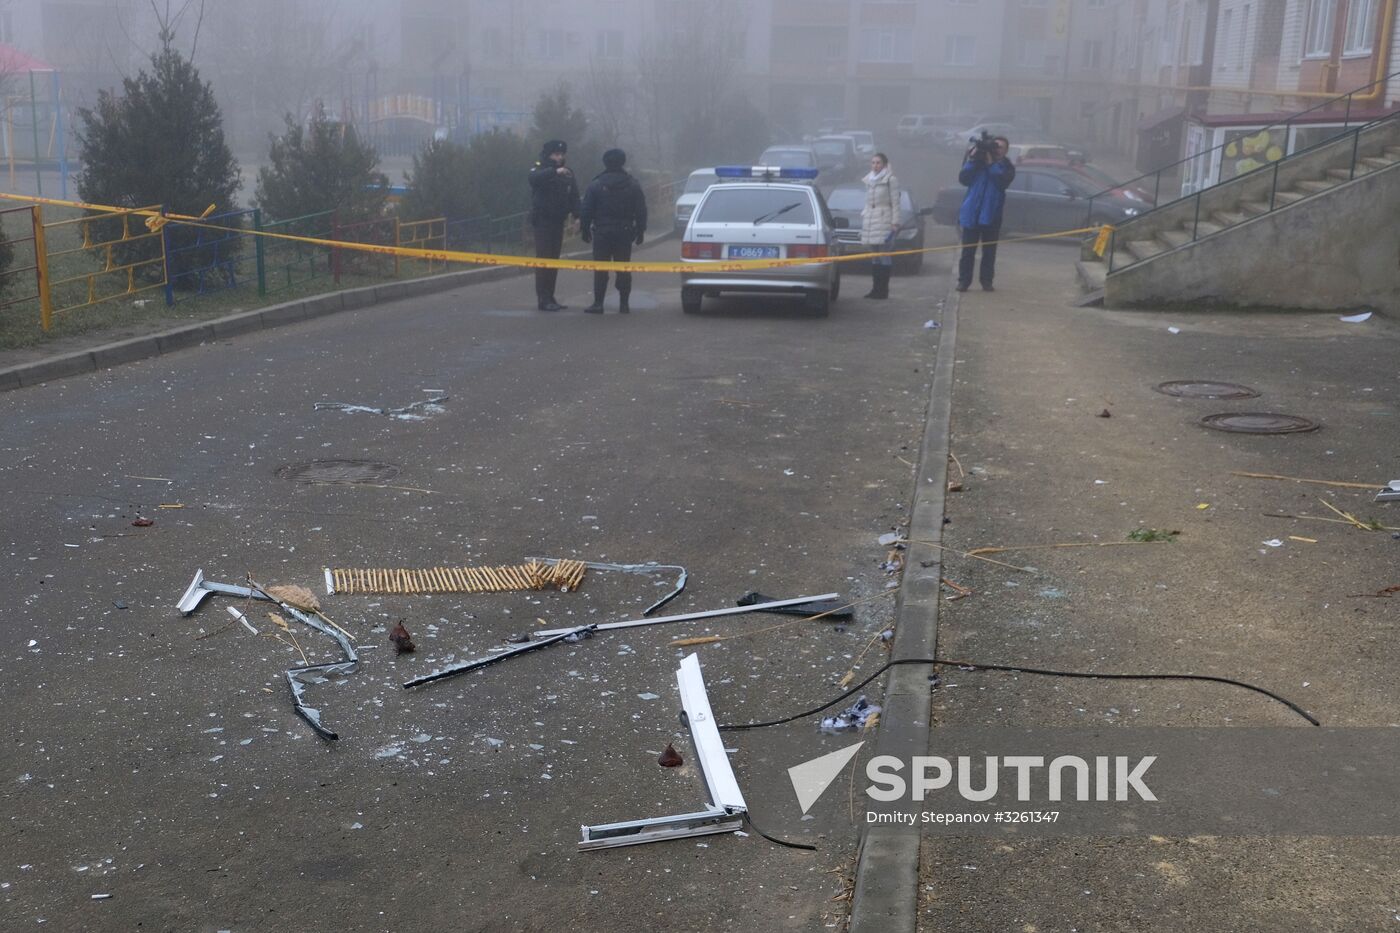 Situation in Stavropol around house grenade blast